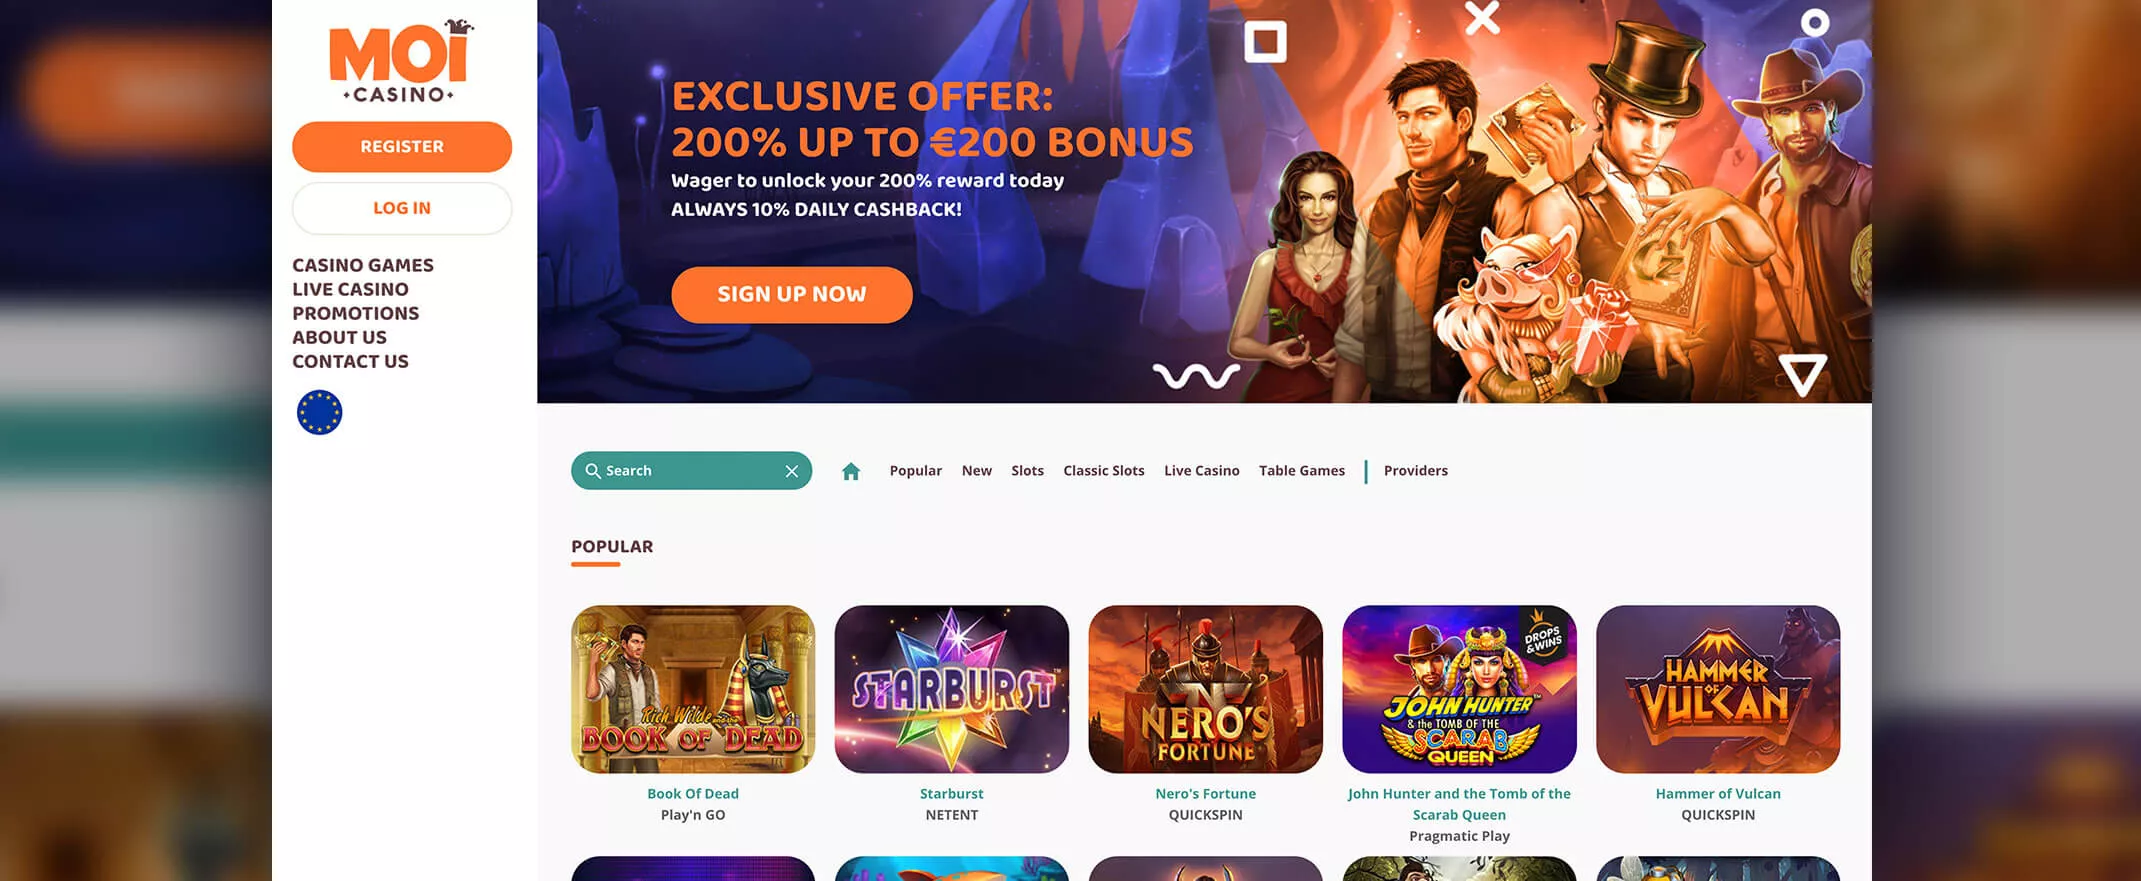 Moi Casino homepage screenshot